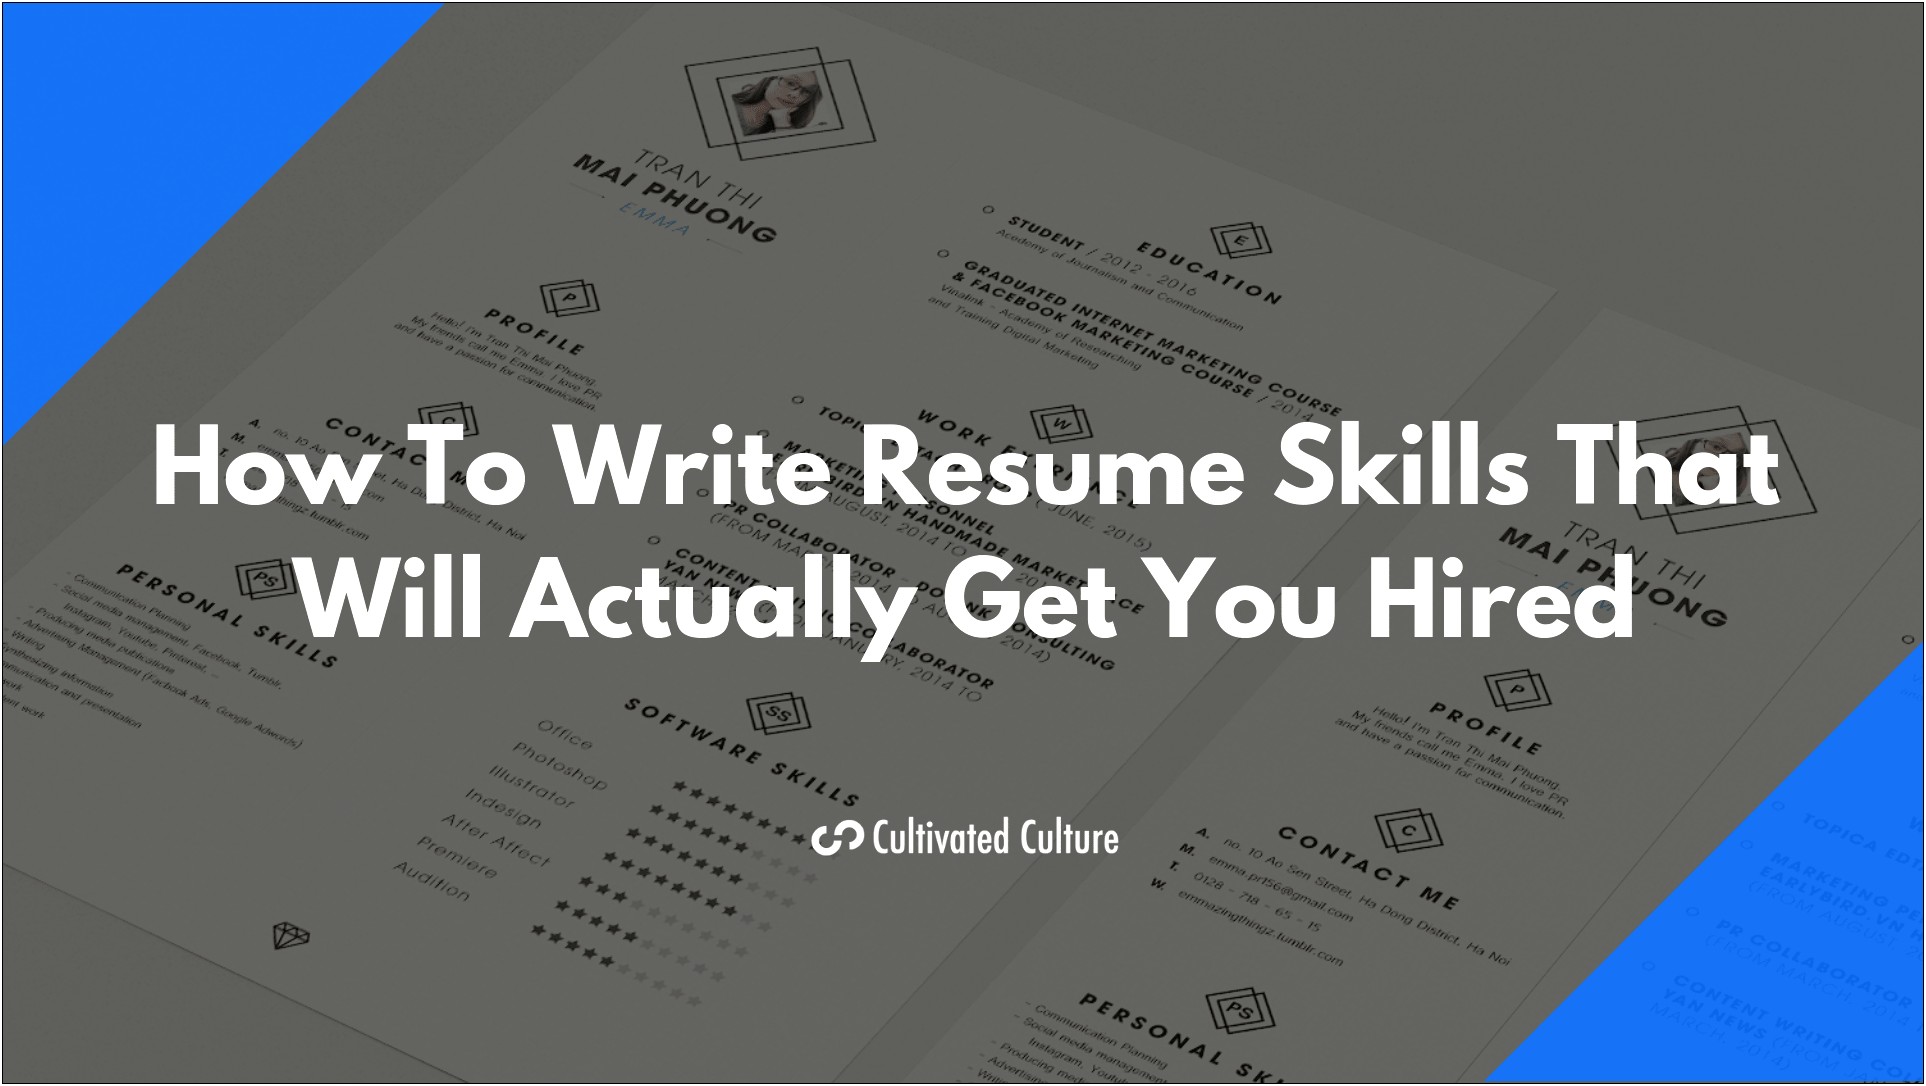 Best Way To Present Skills On Resume